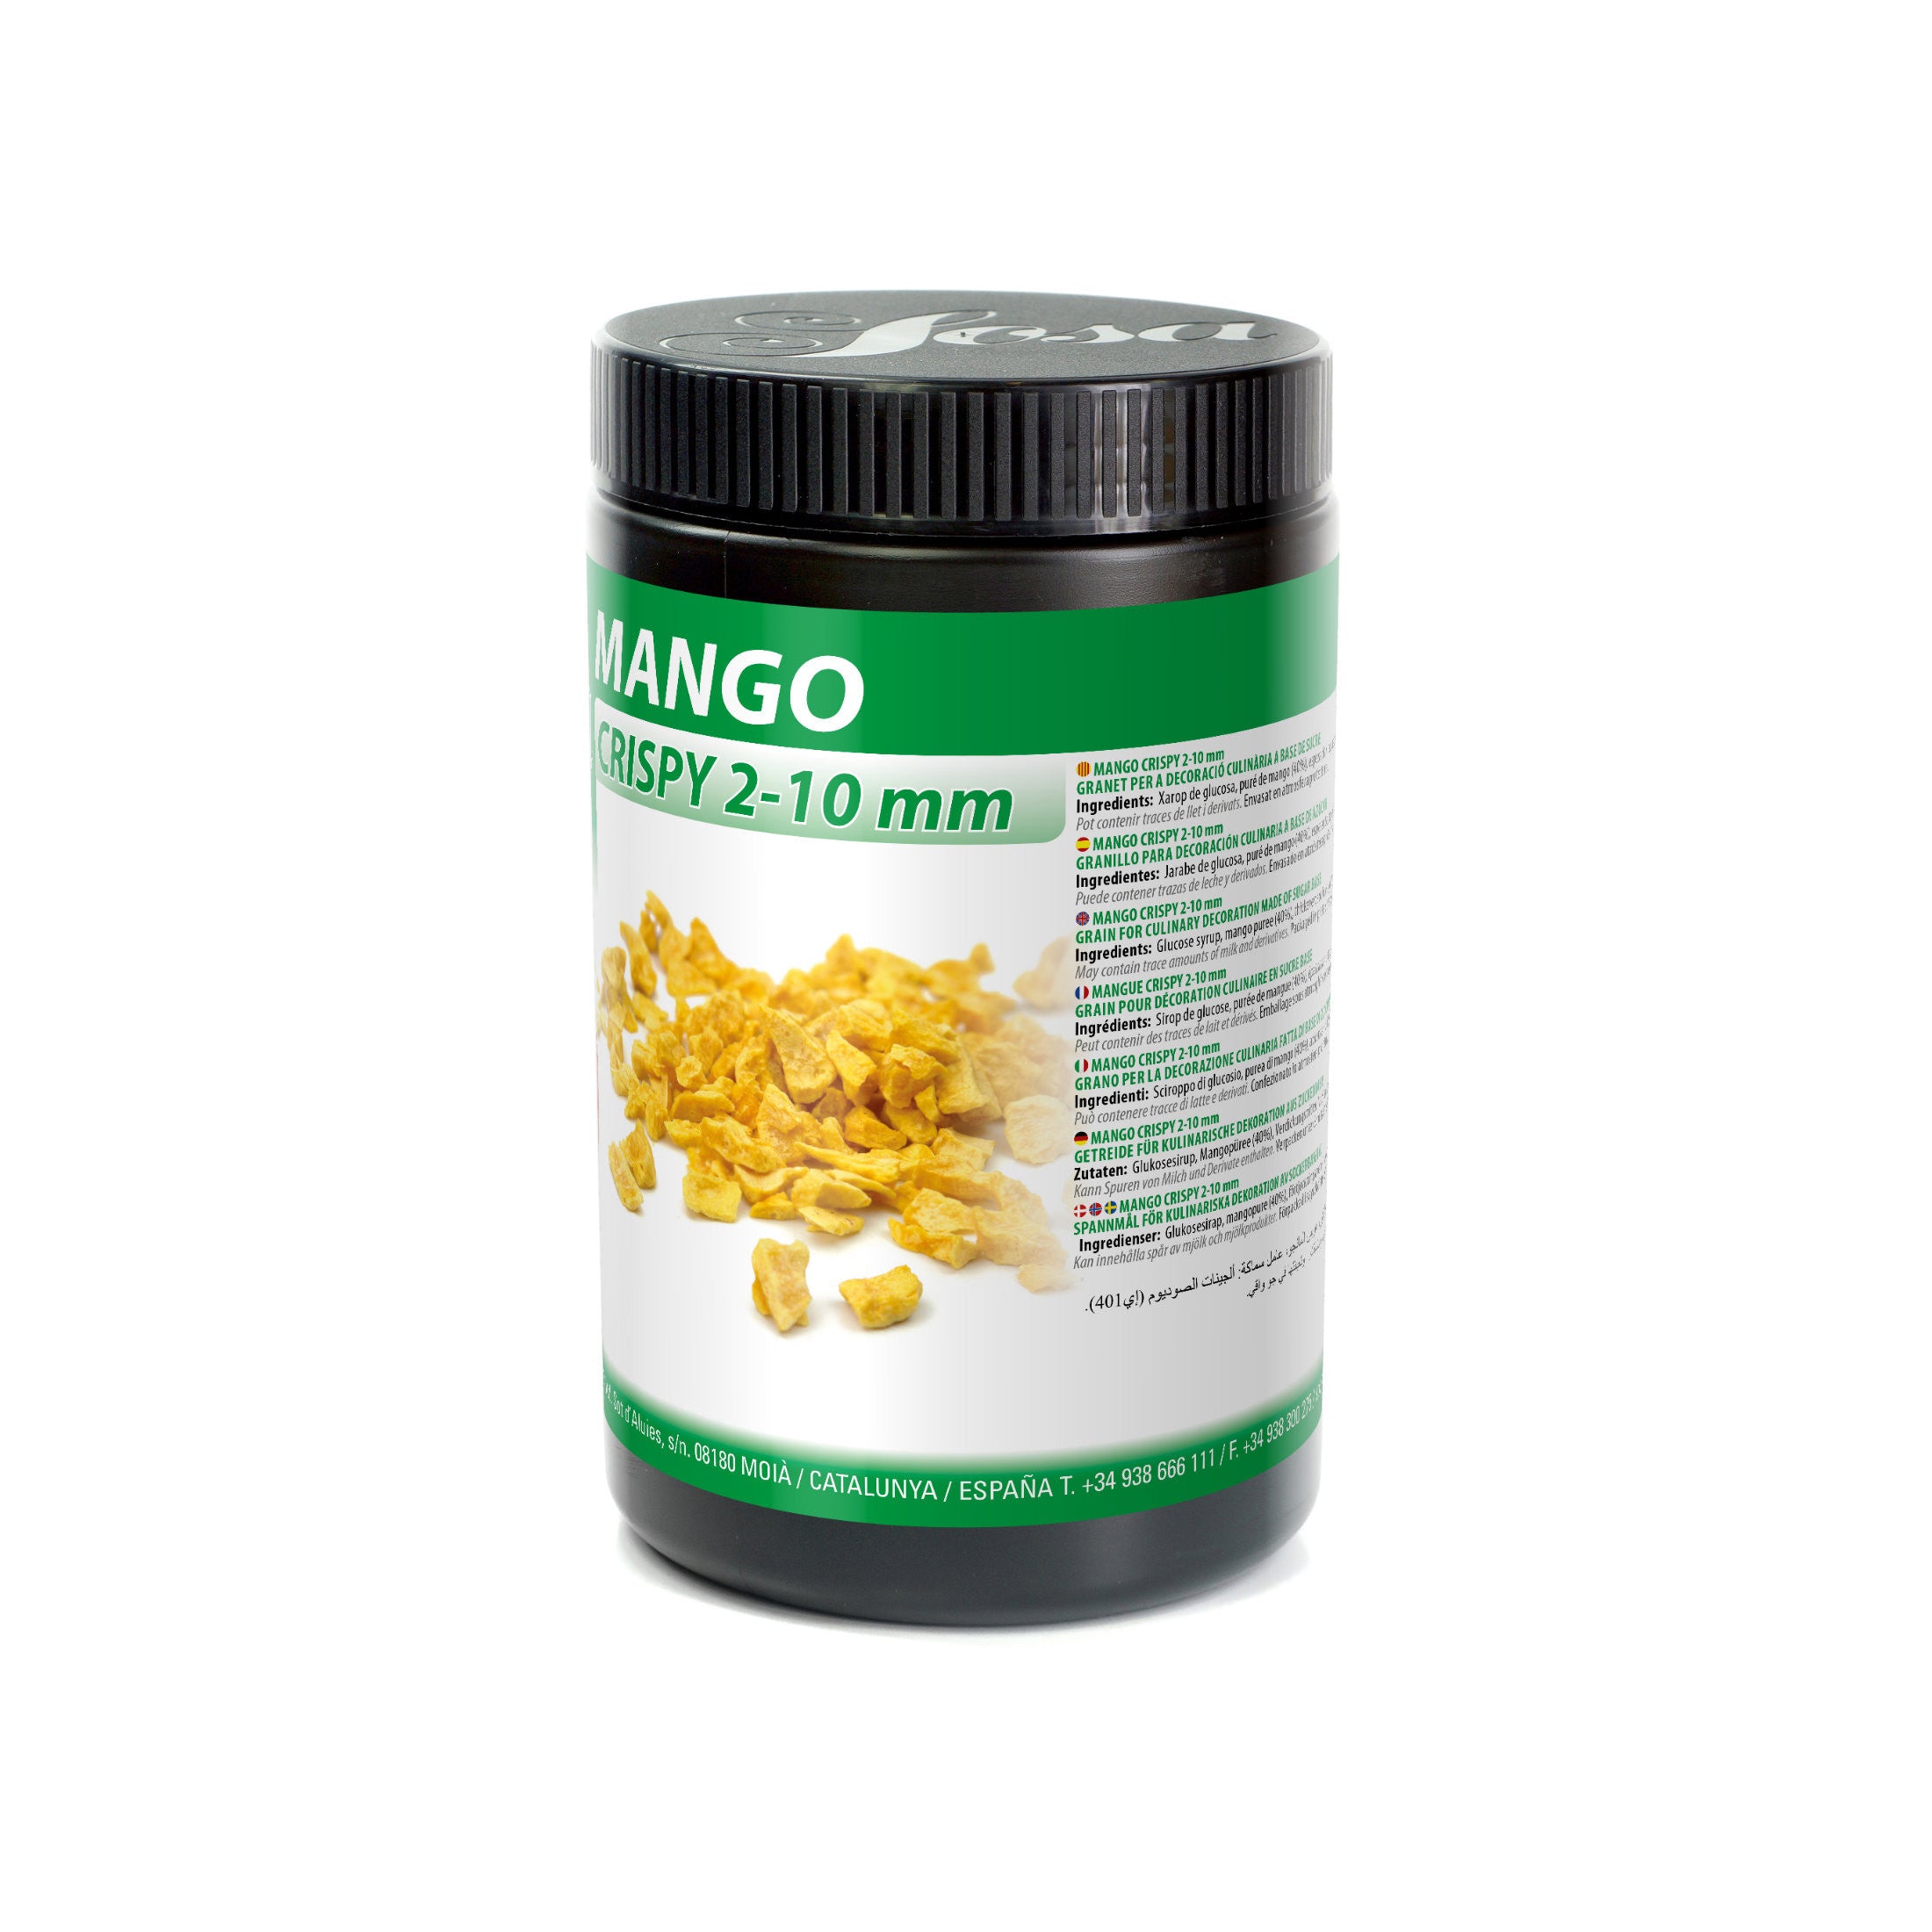 SOSA Freeze Dried Mango Crispy 2-10mm, 250g